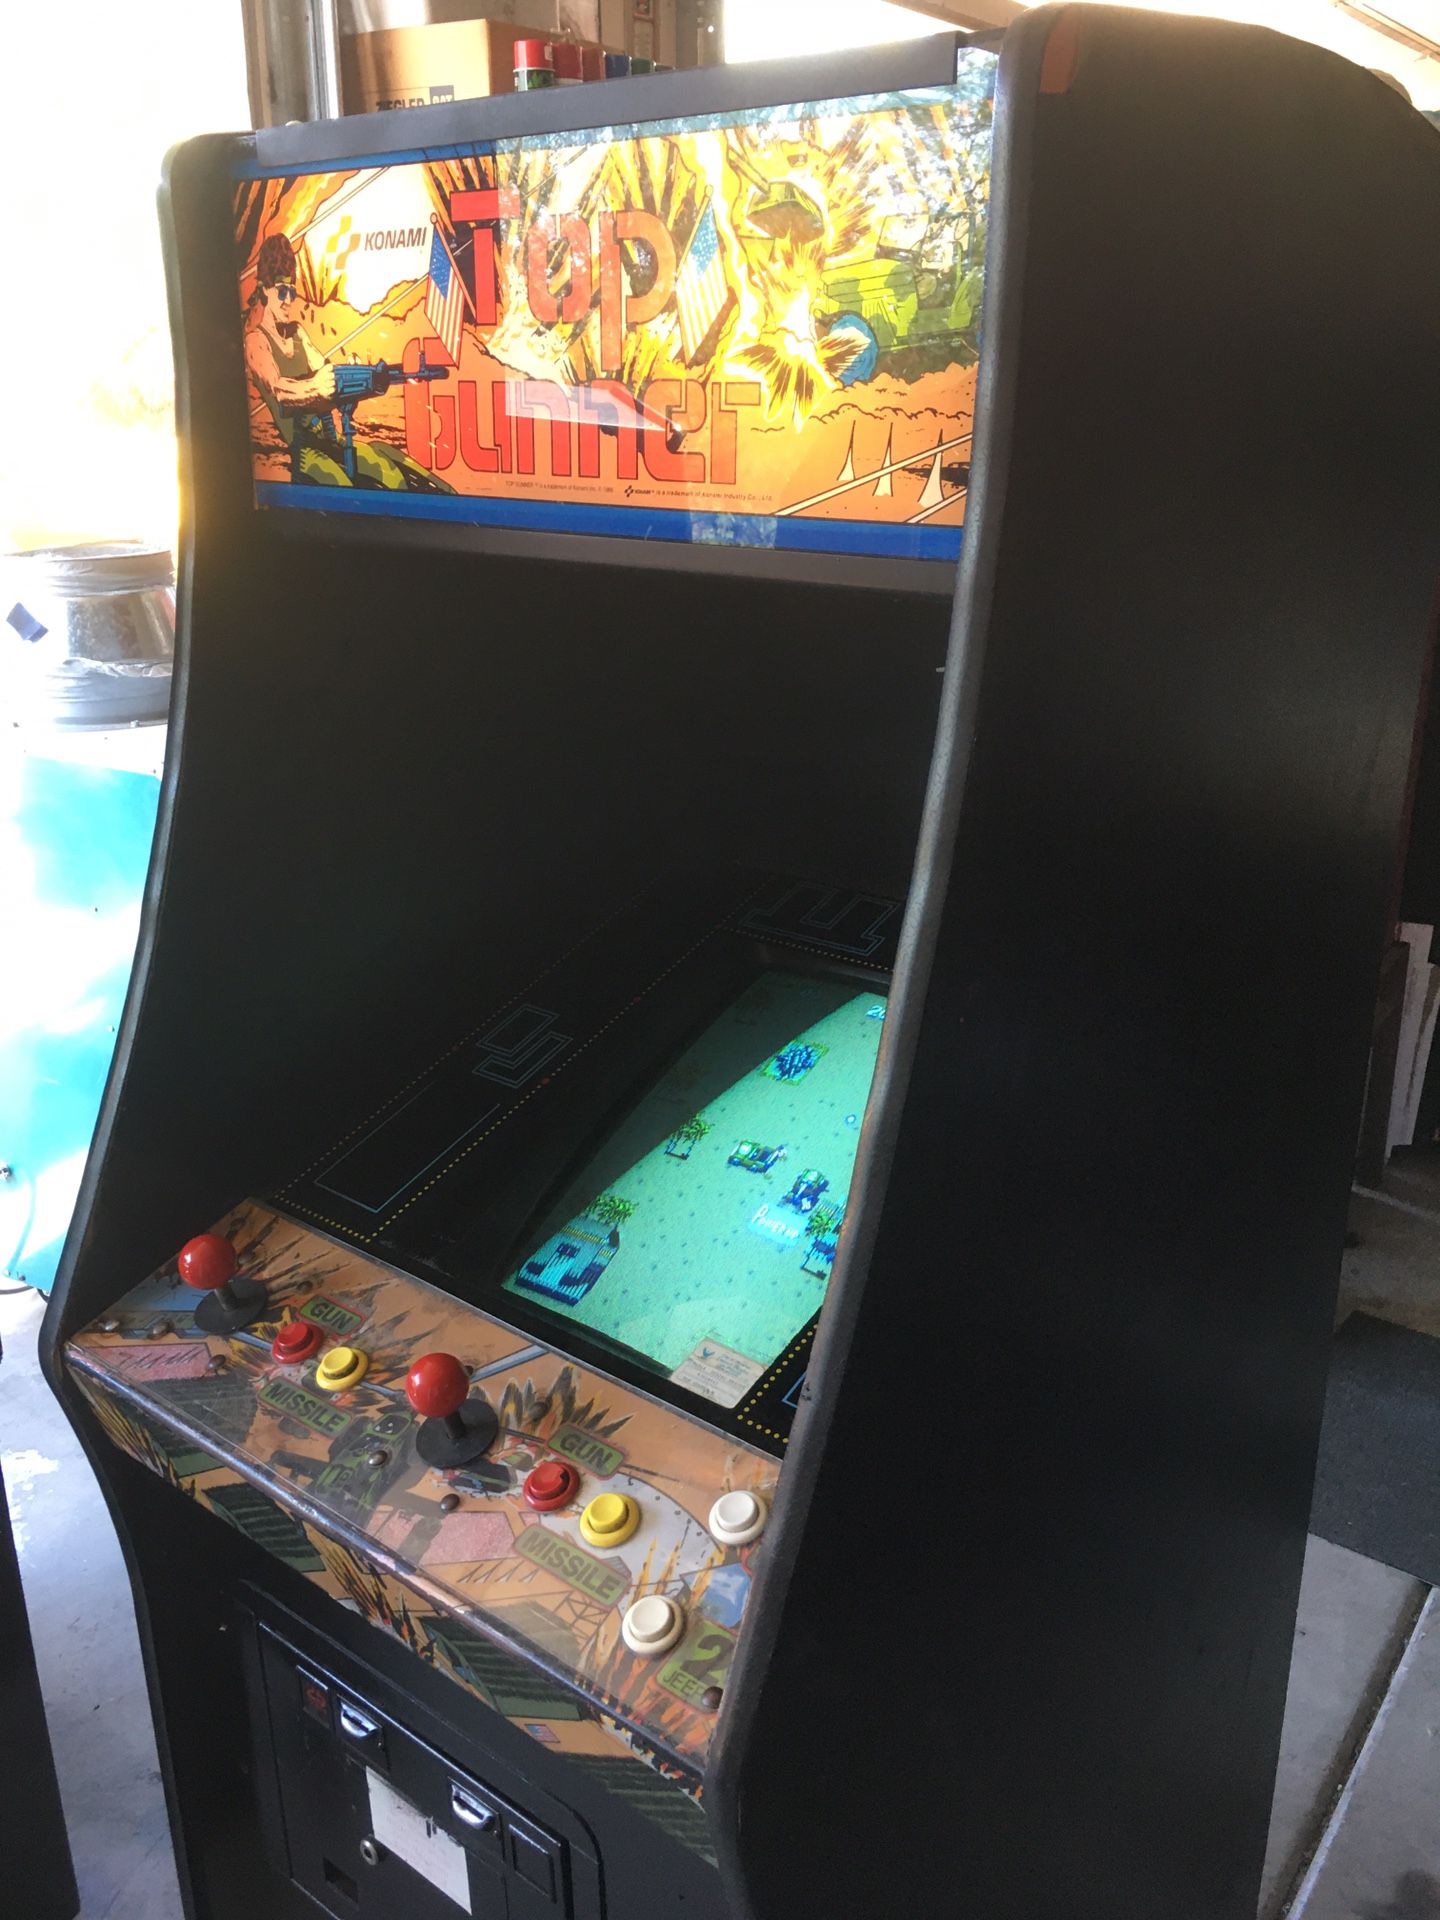 Top gunner arcade video game